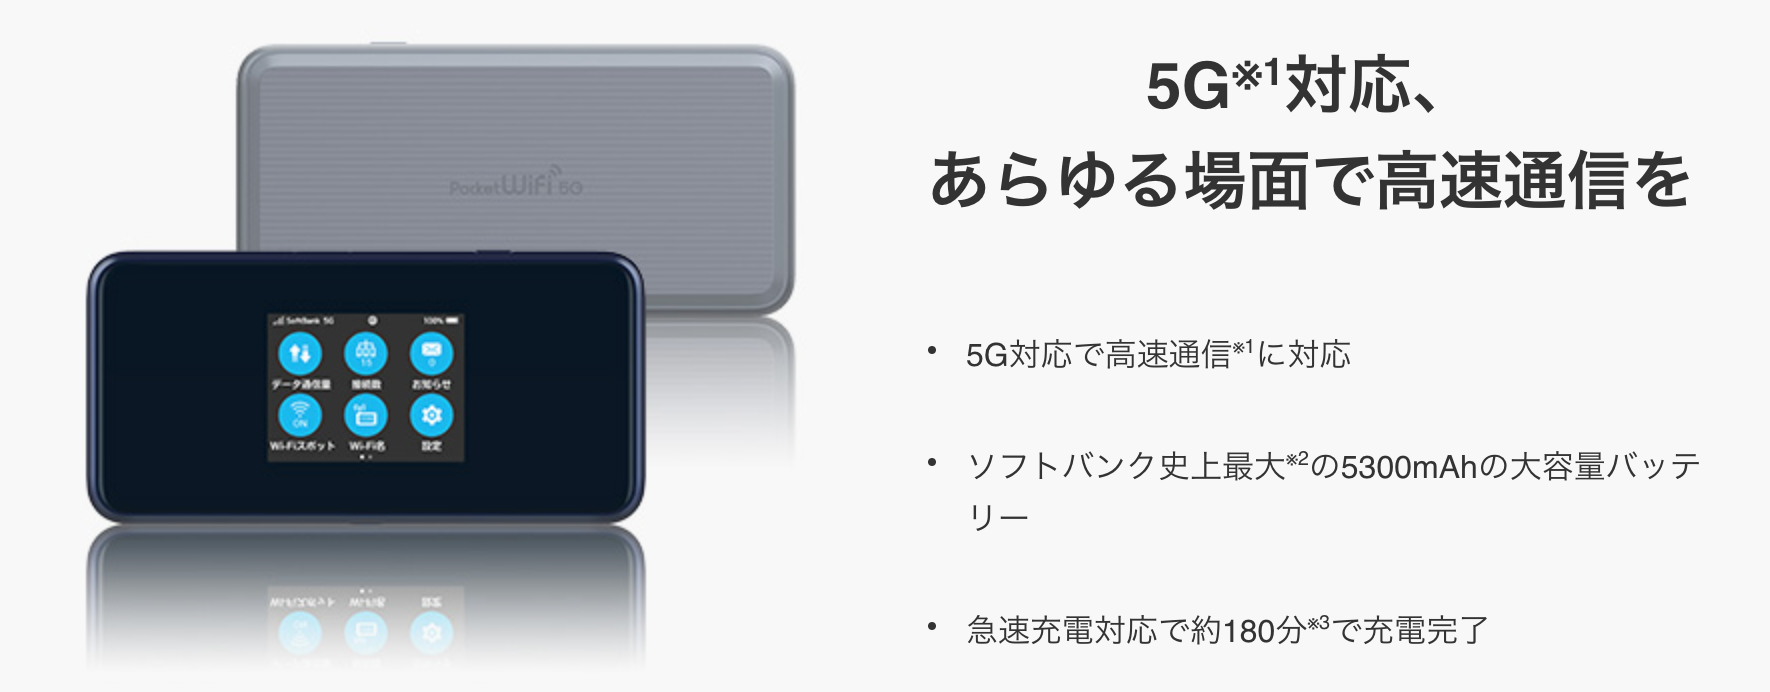 Pocket WiFi 5G A101ZT